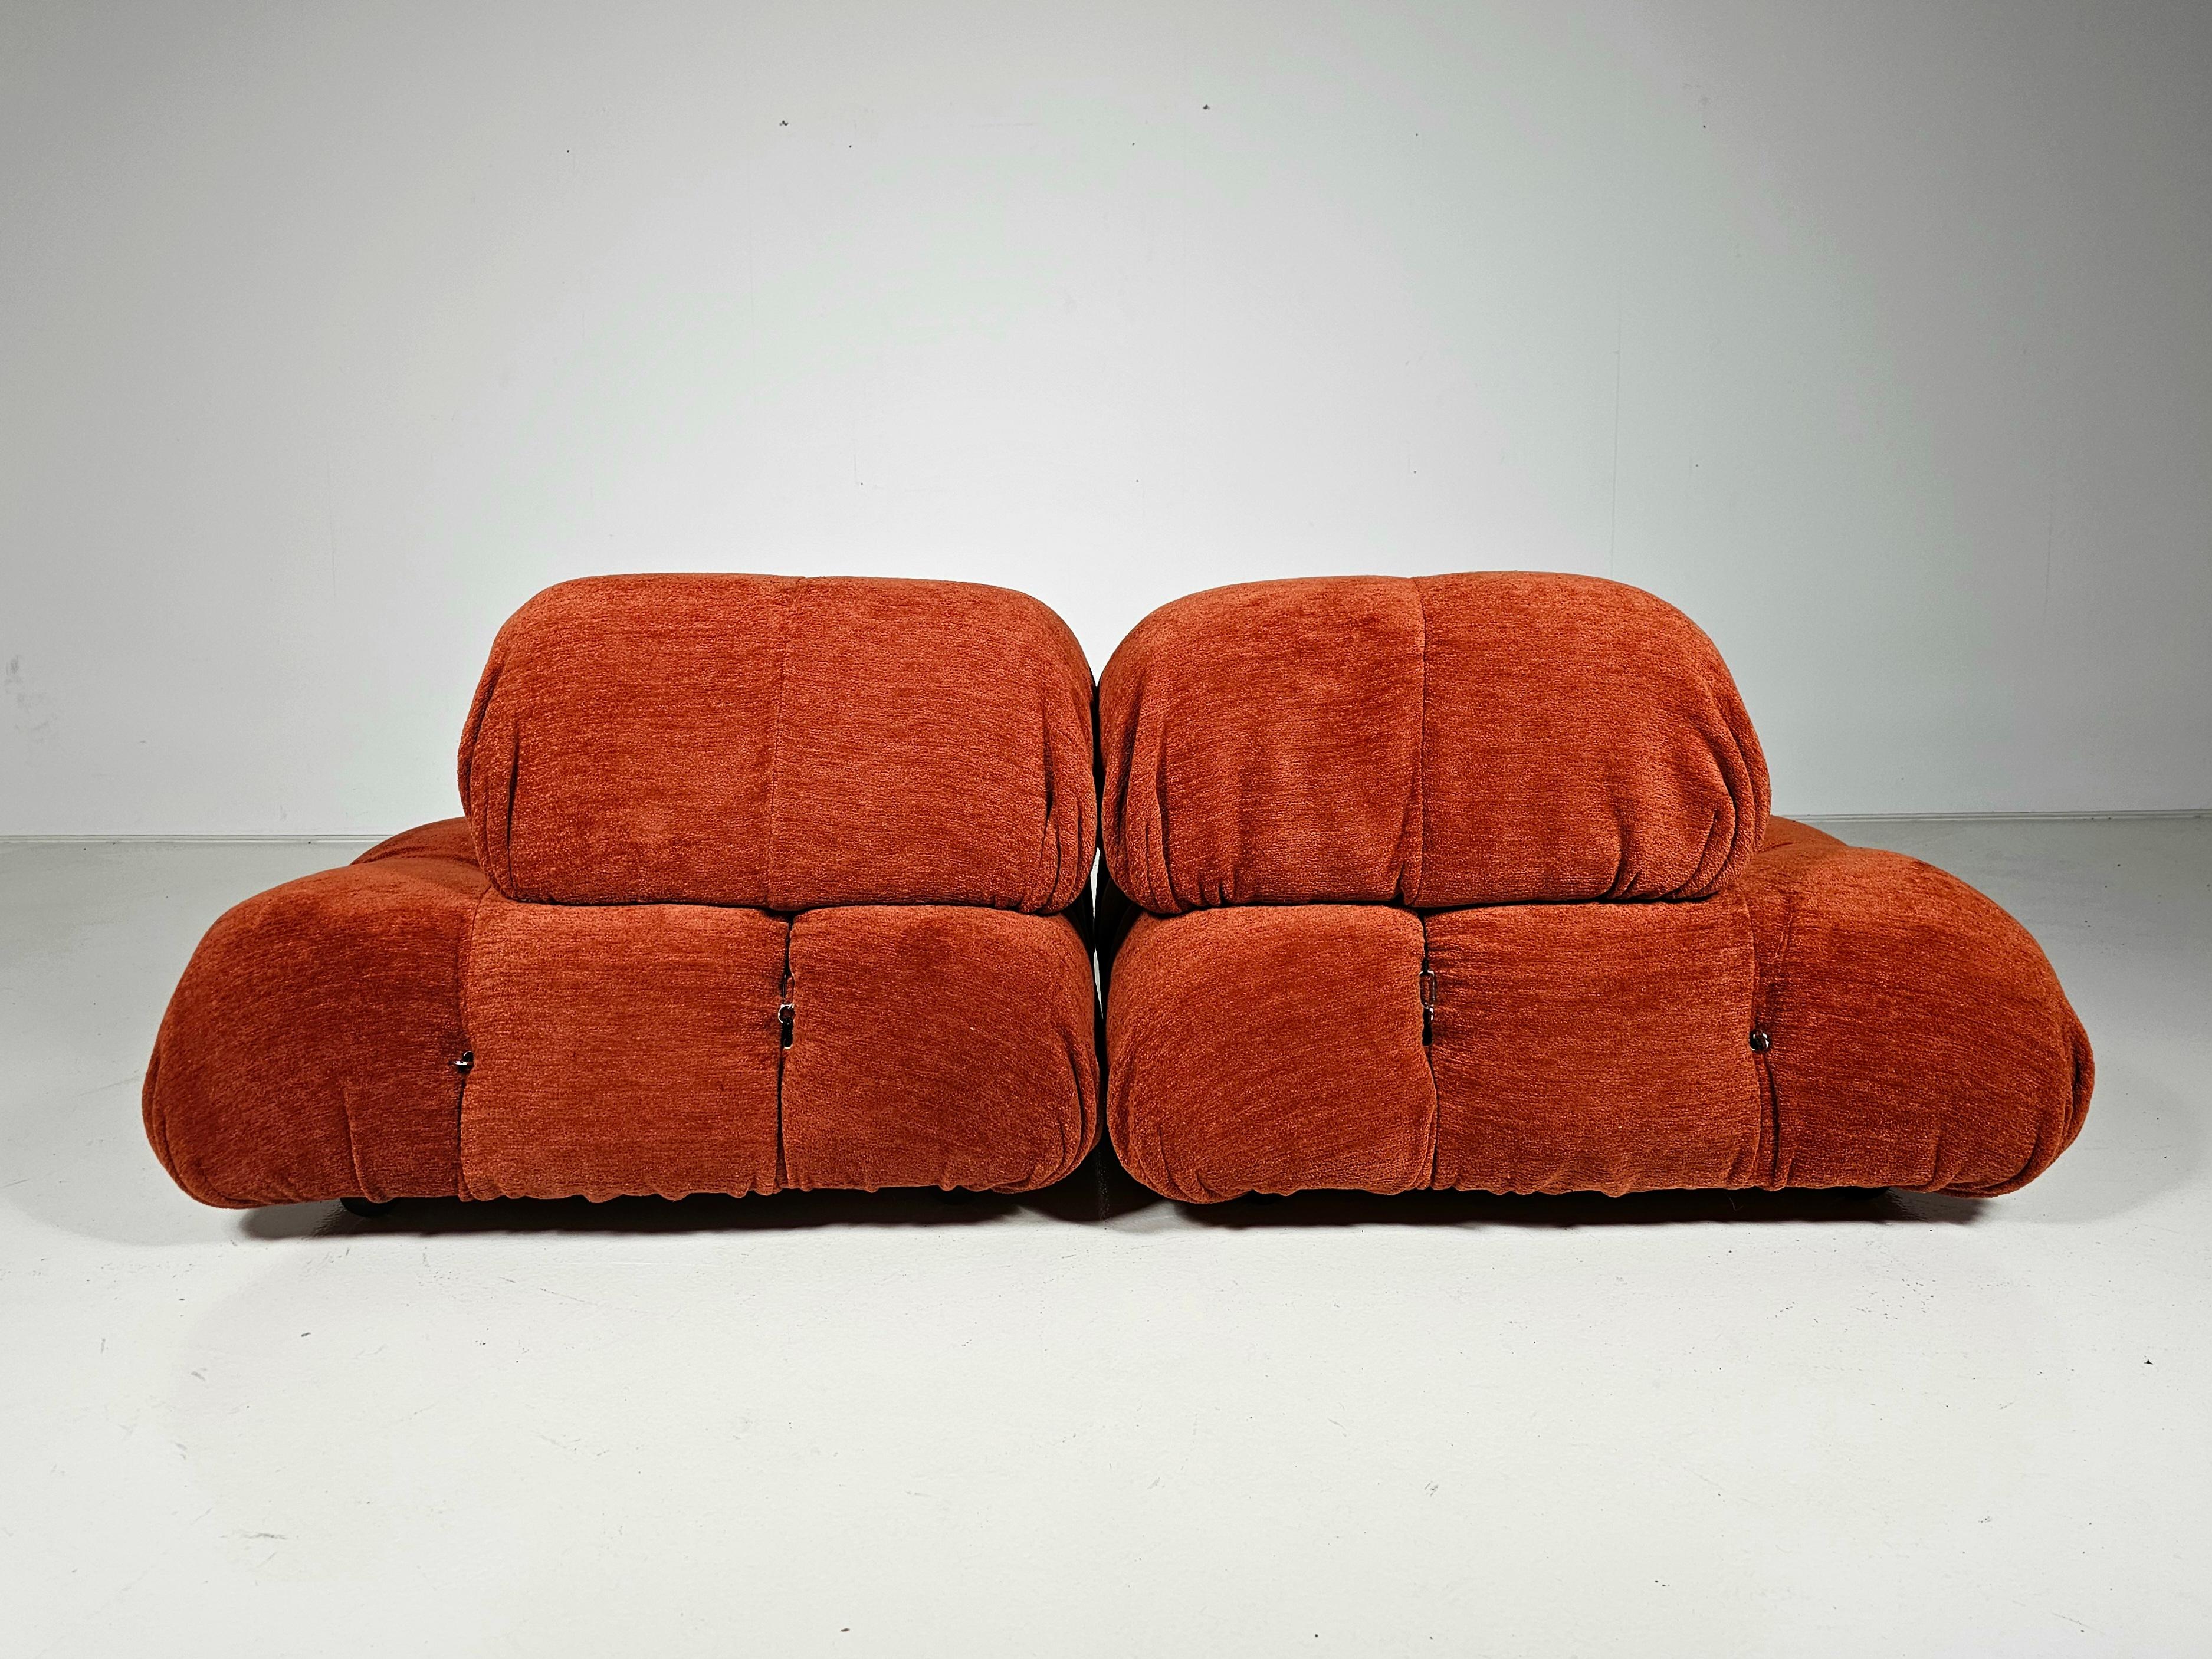 Chenille Camaleonda chaise longues sofa by Mario Bellini for C&B Italia, 1970s